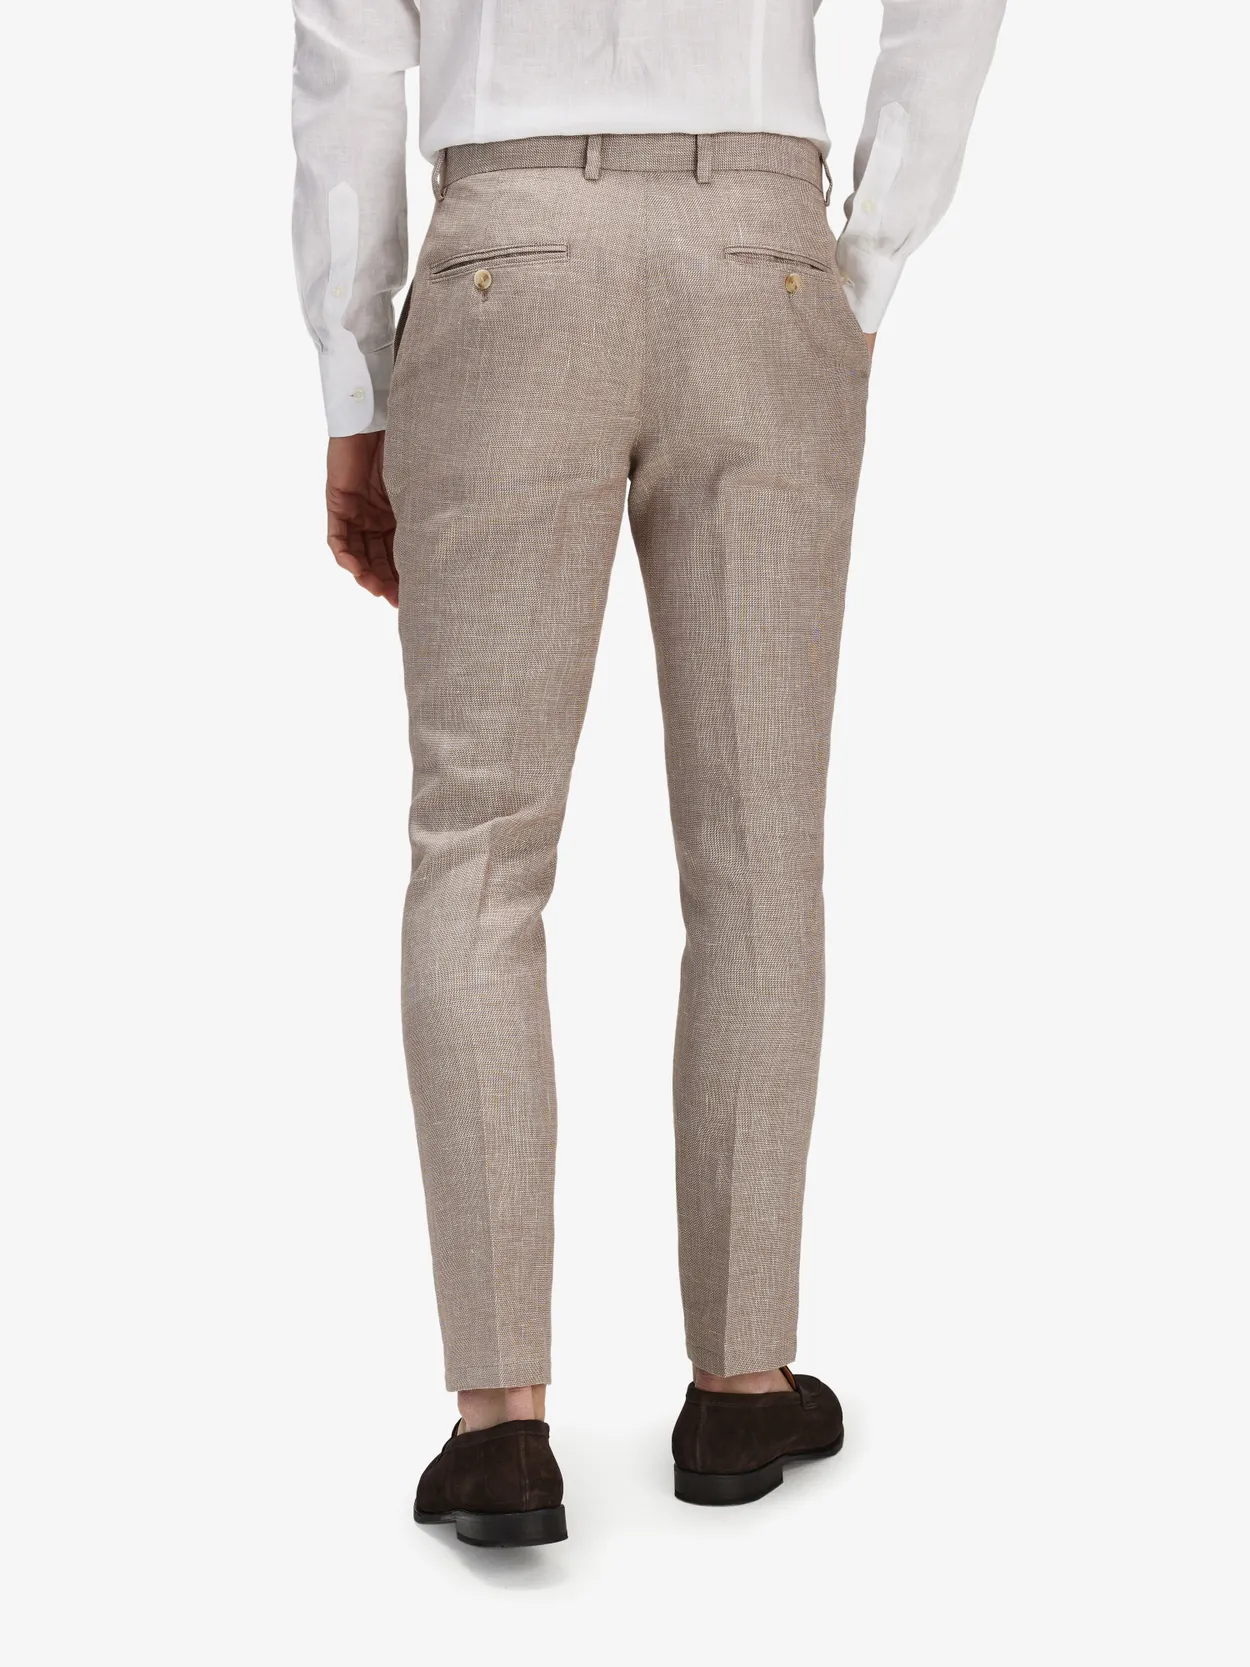 Buy Men Beige Solid Skinny Fit Trousers Online - 885869